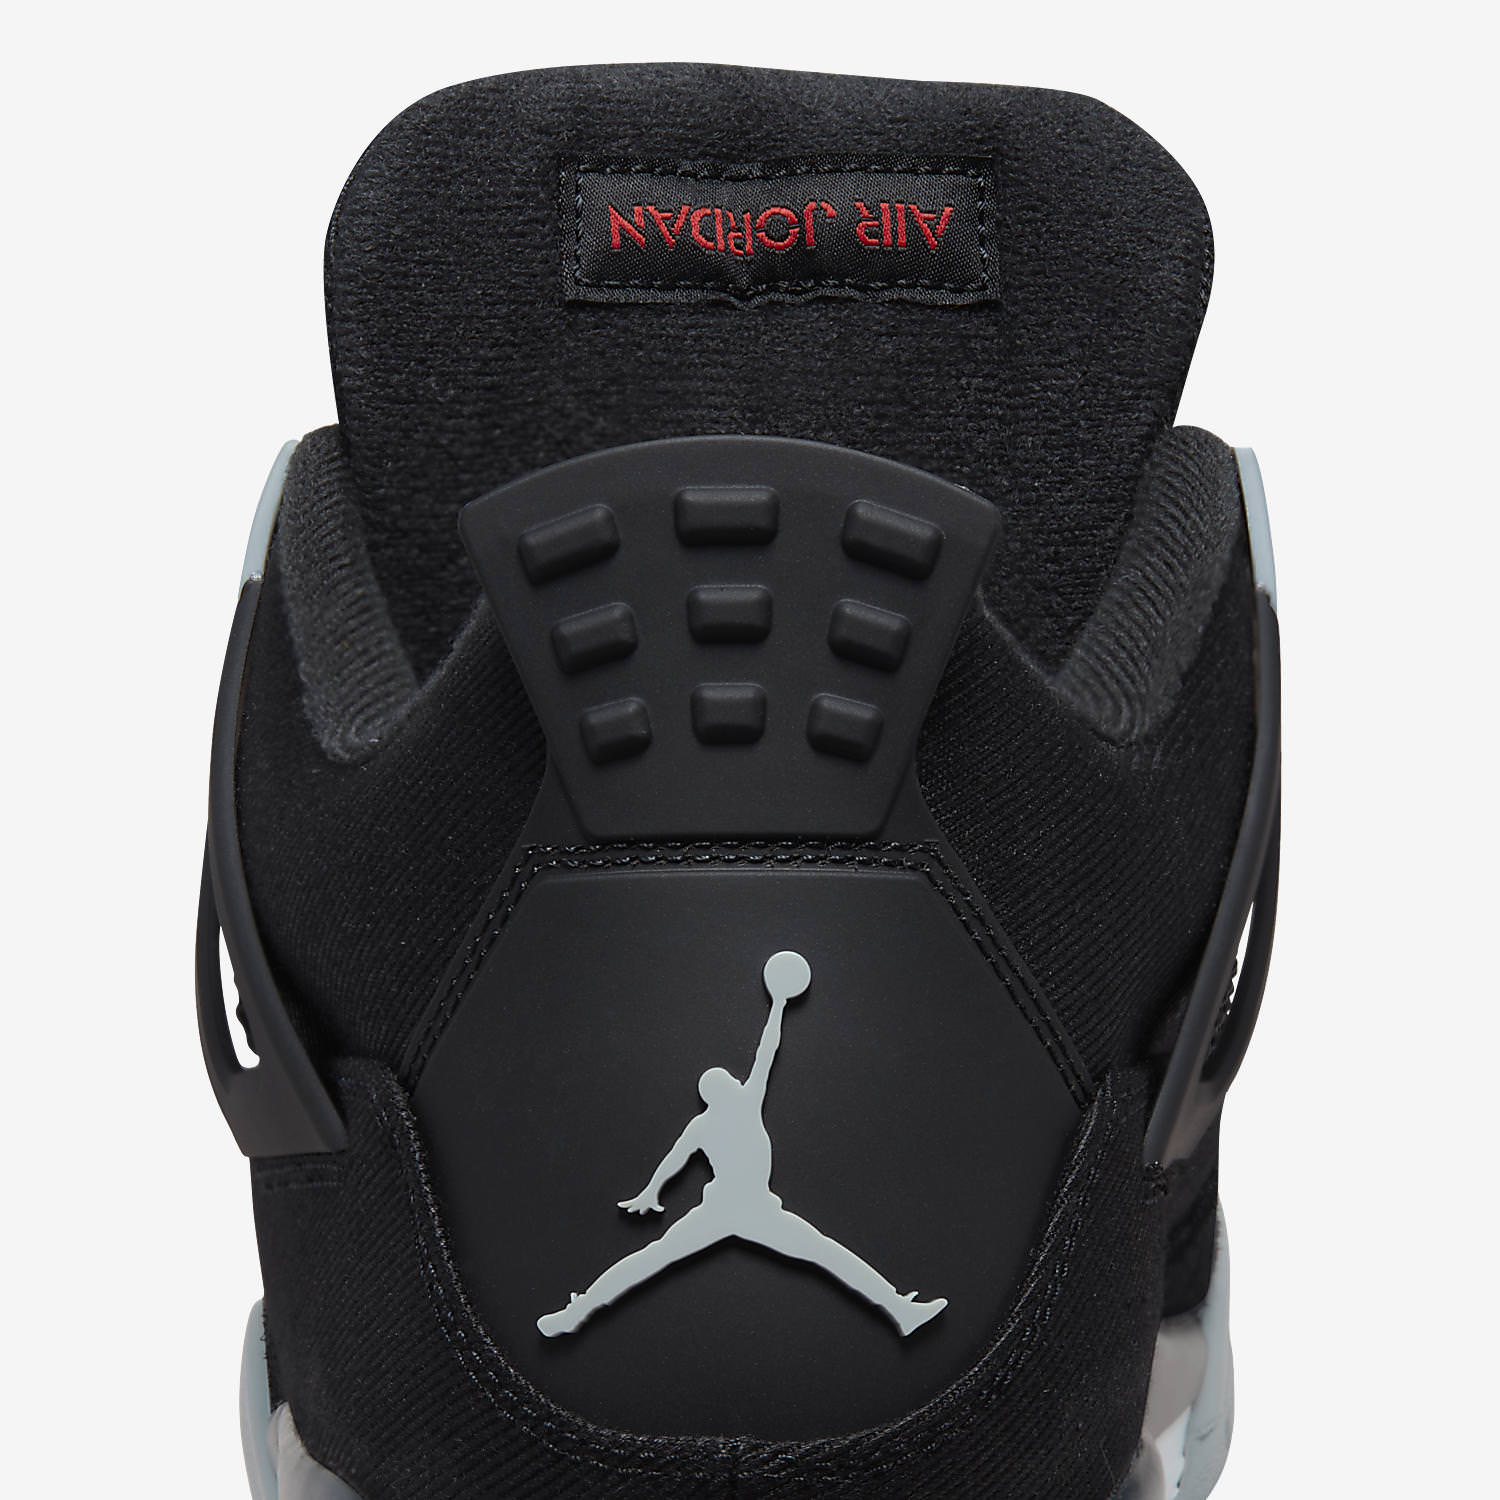 Official Look At The Air Jordan 4 Retro “Black Canvas”